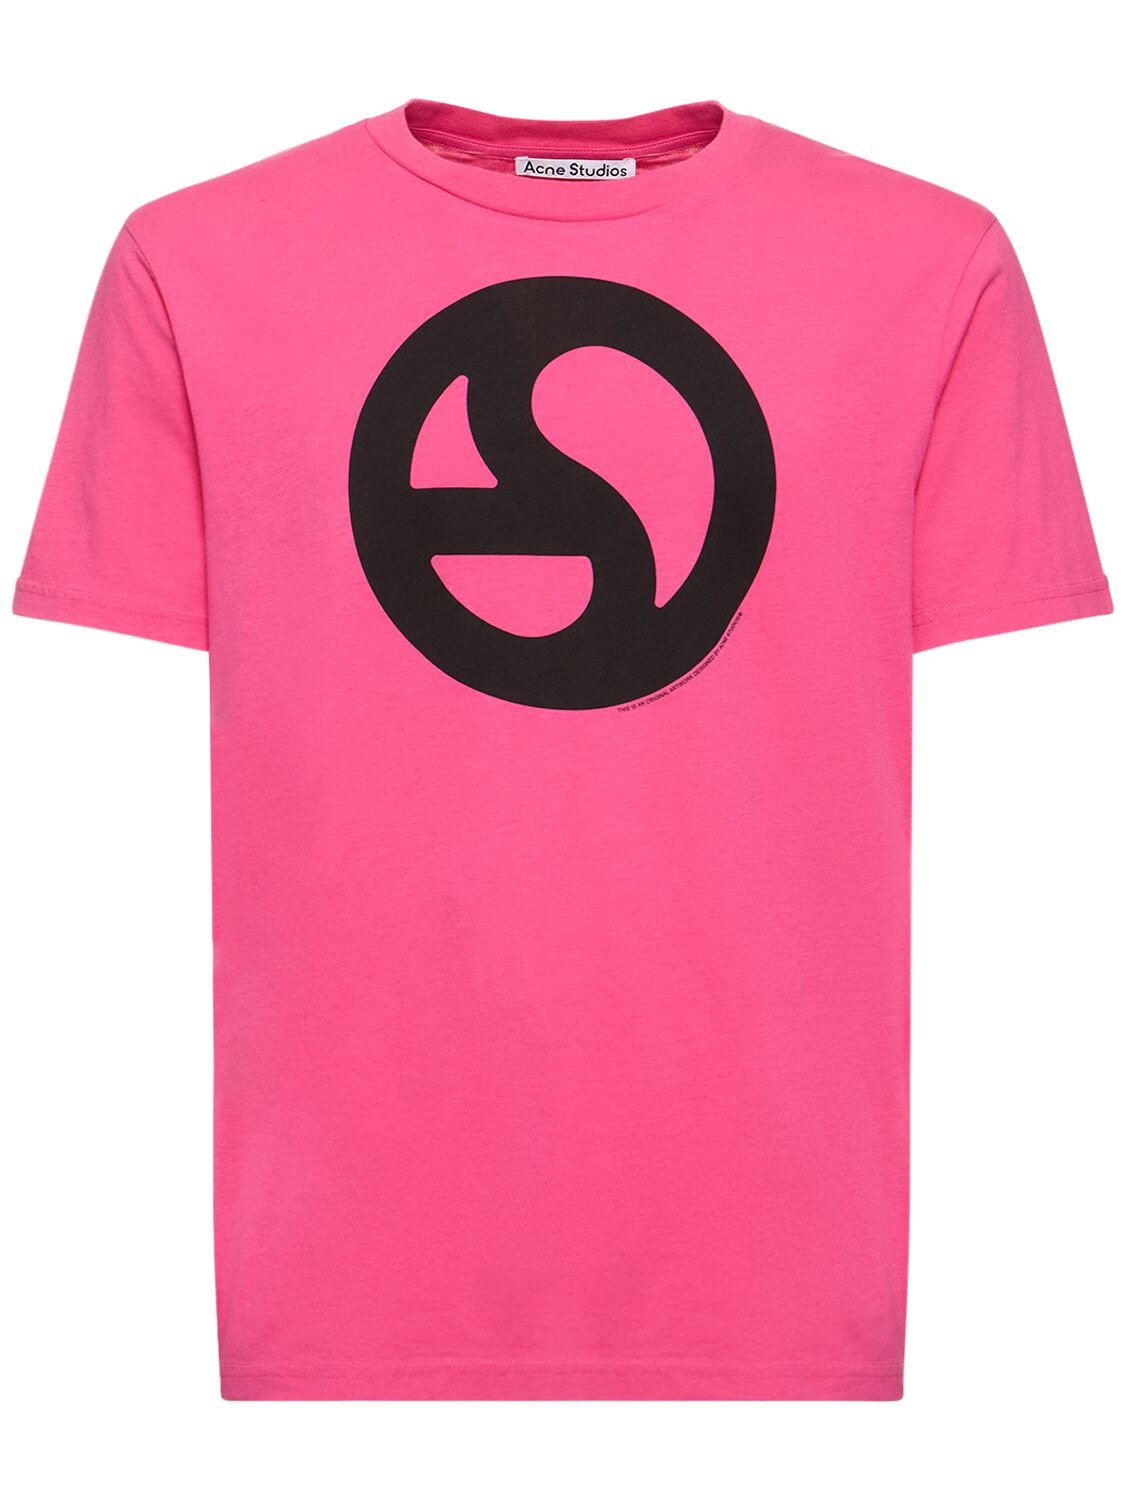 Acne Studios Everest Monogram Cotton Blend T-shirt In Neon Pink